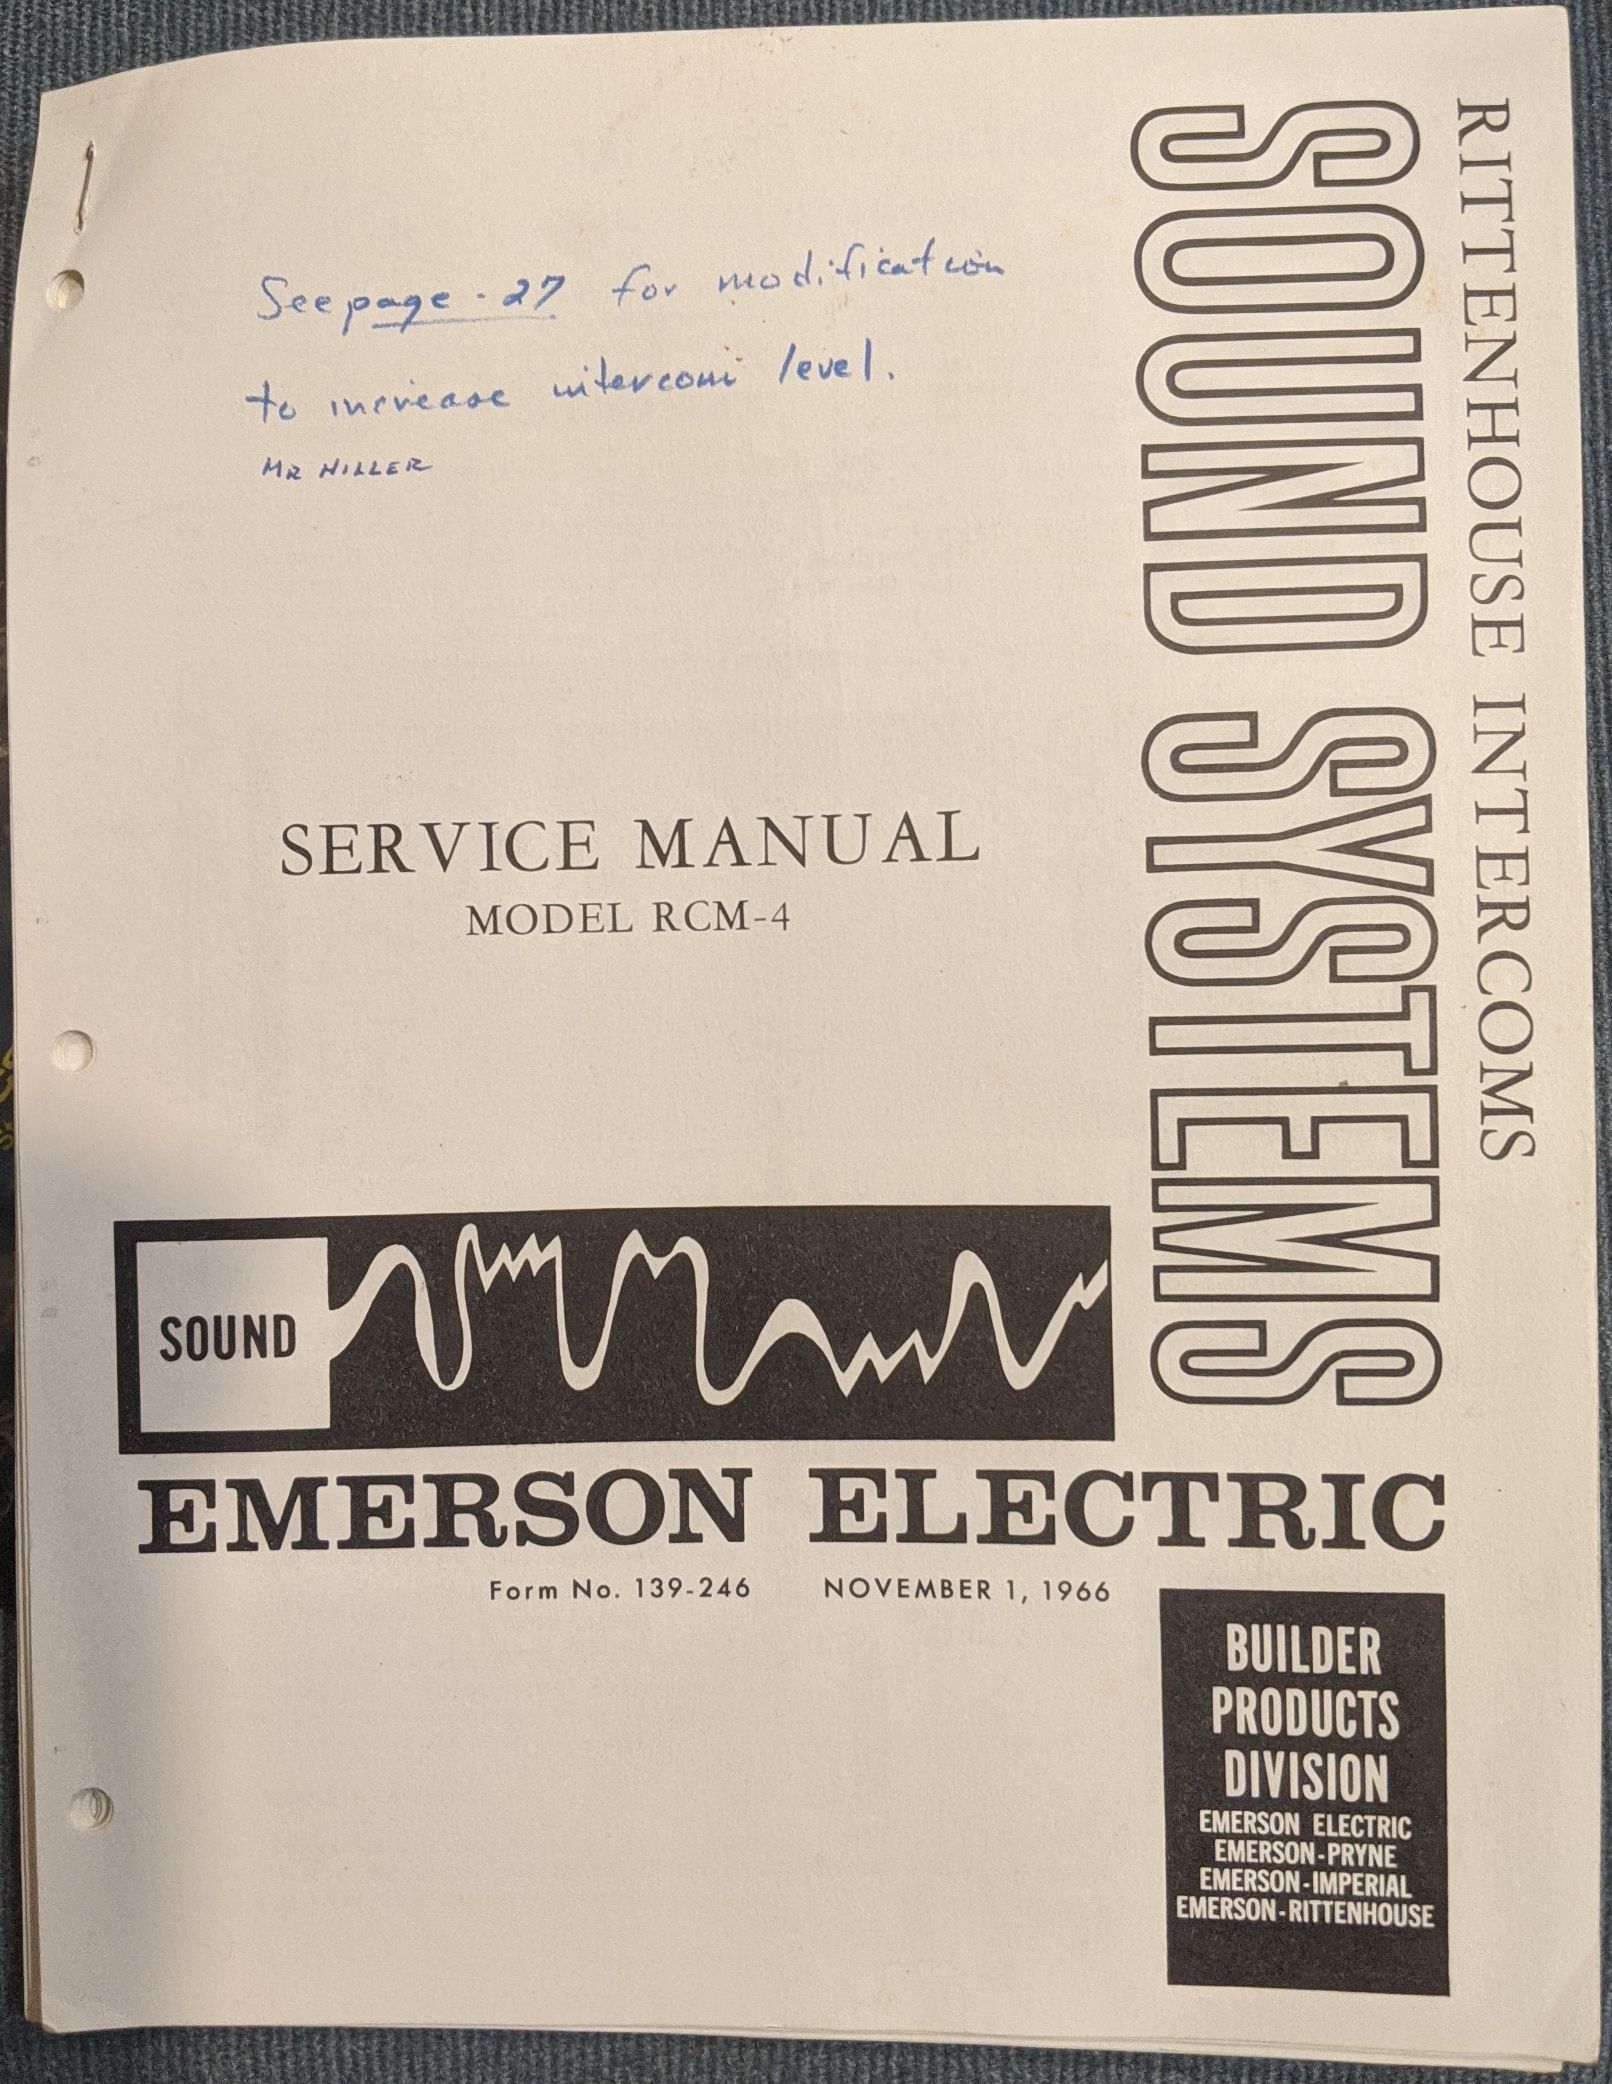 Emerson Electric Intercom Manual